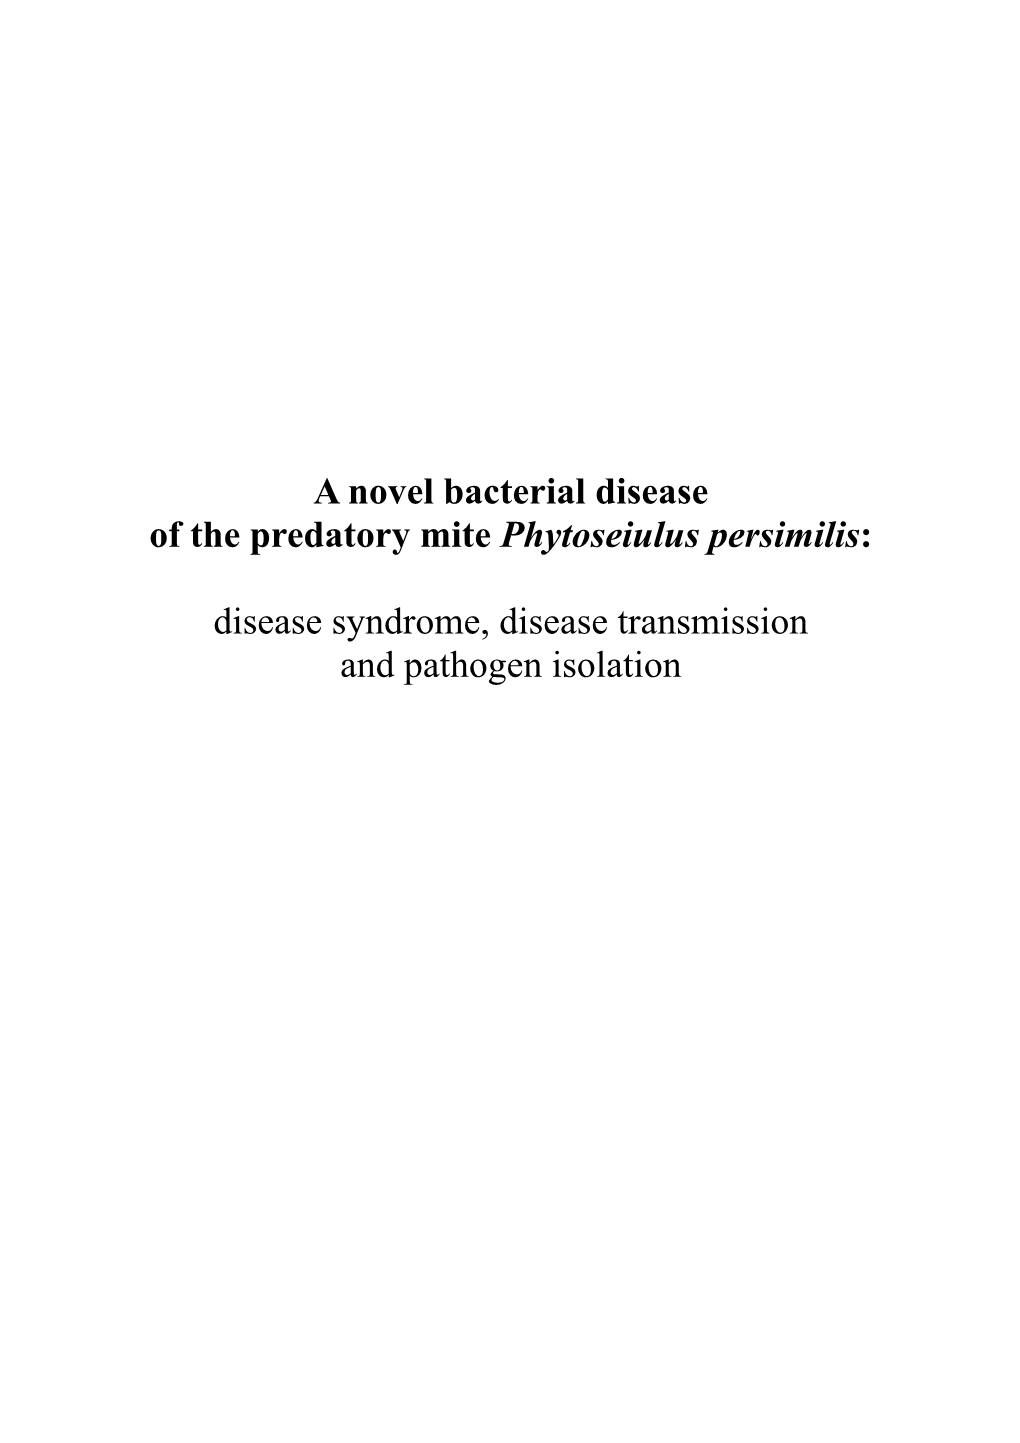 A Novel Bacterial Disease of the Predatory Mite Phytoseiulus Persimilis